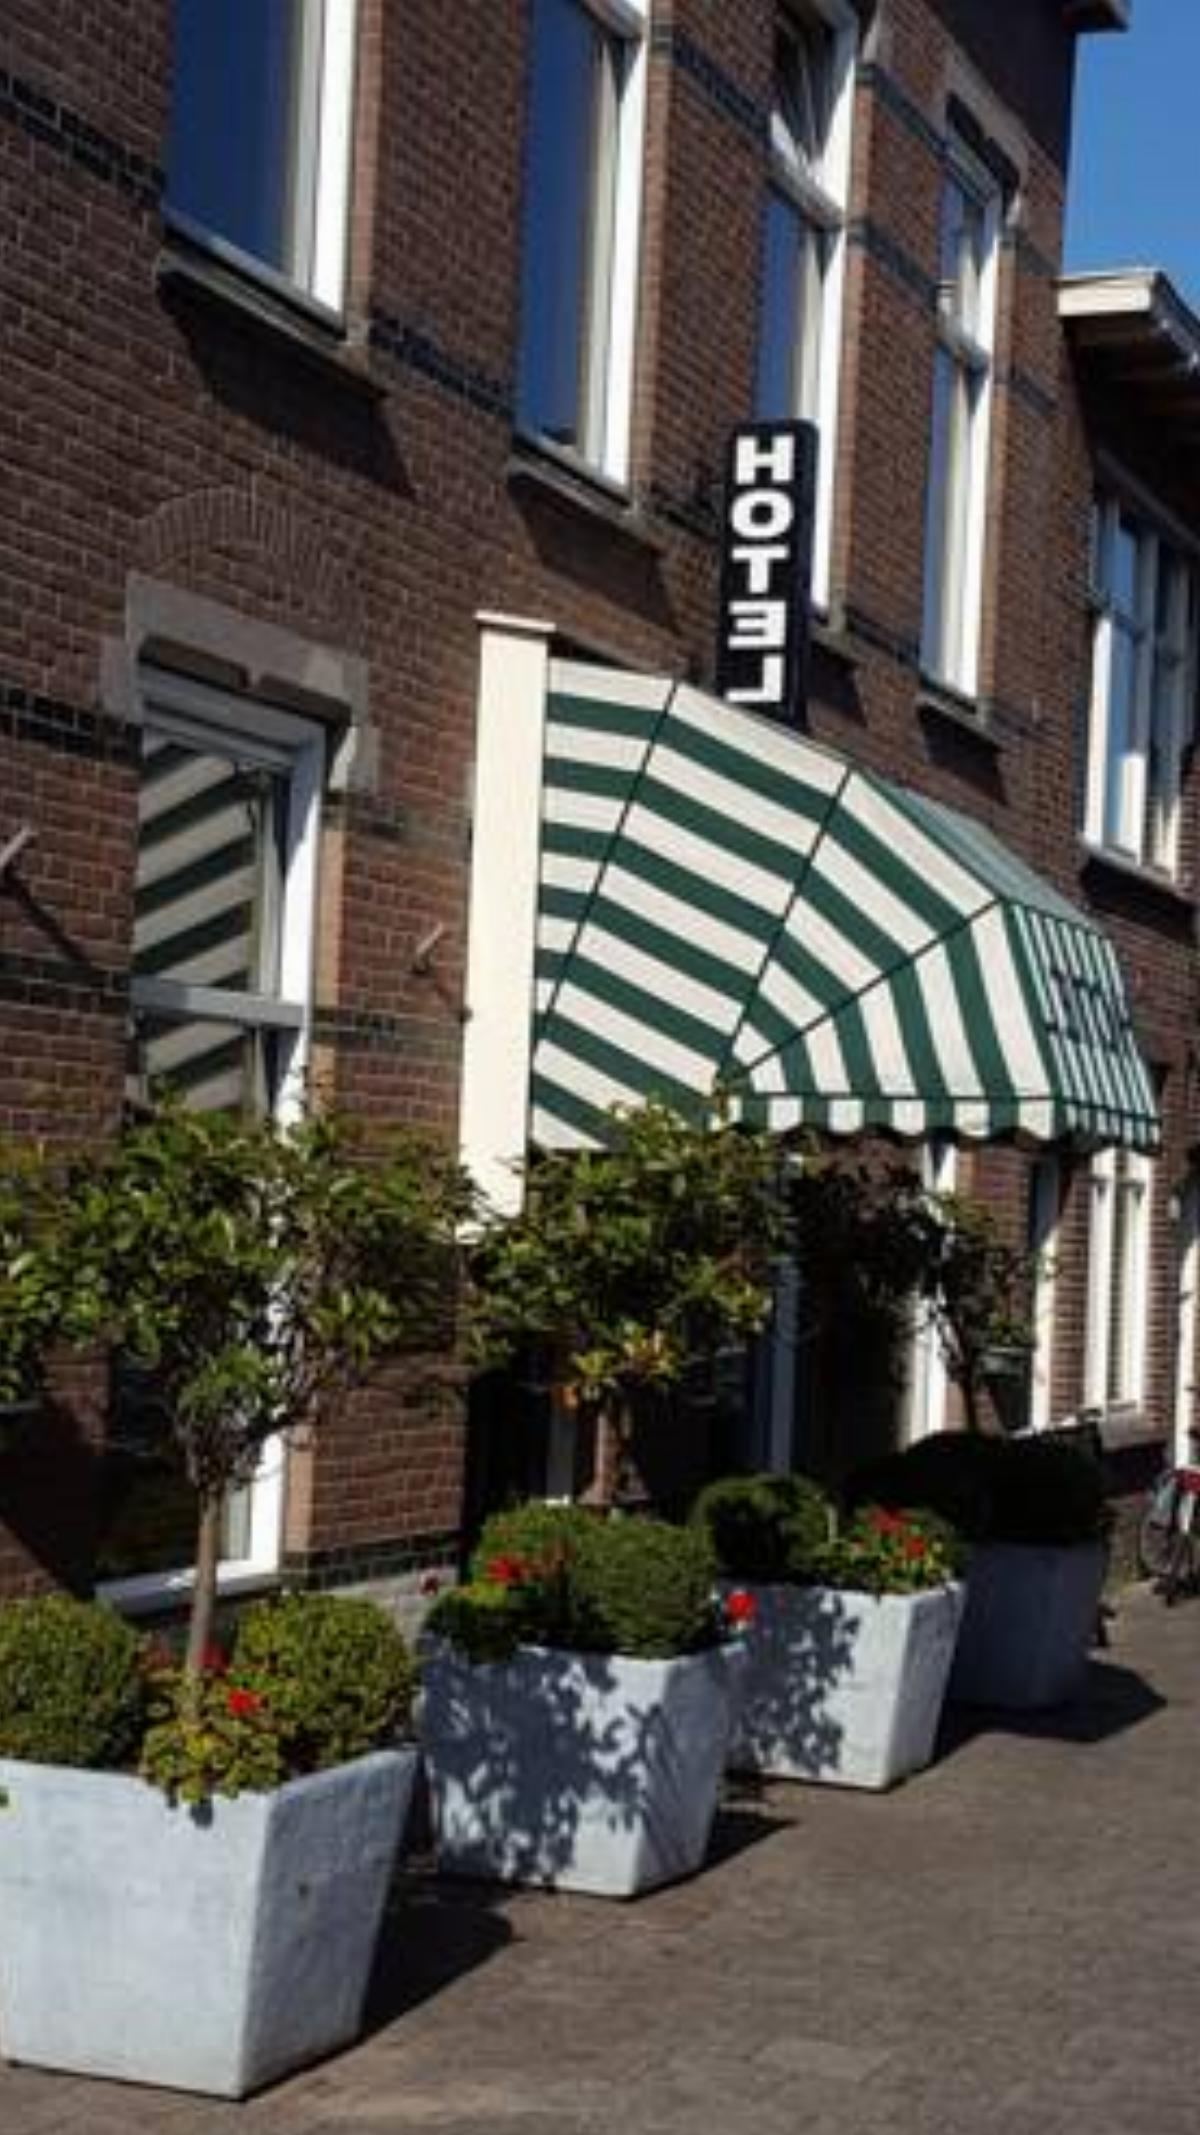 Hotel Kuiperduin Hotel Hoek van Holland Netherlands